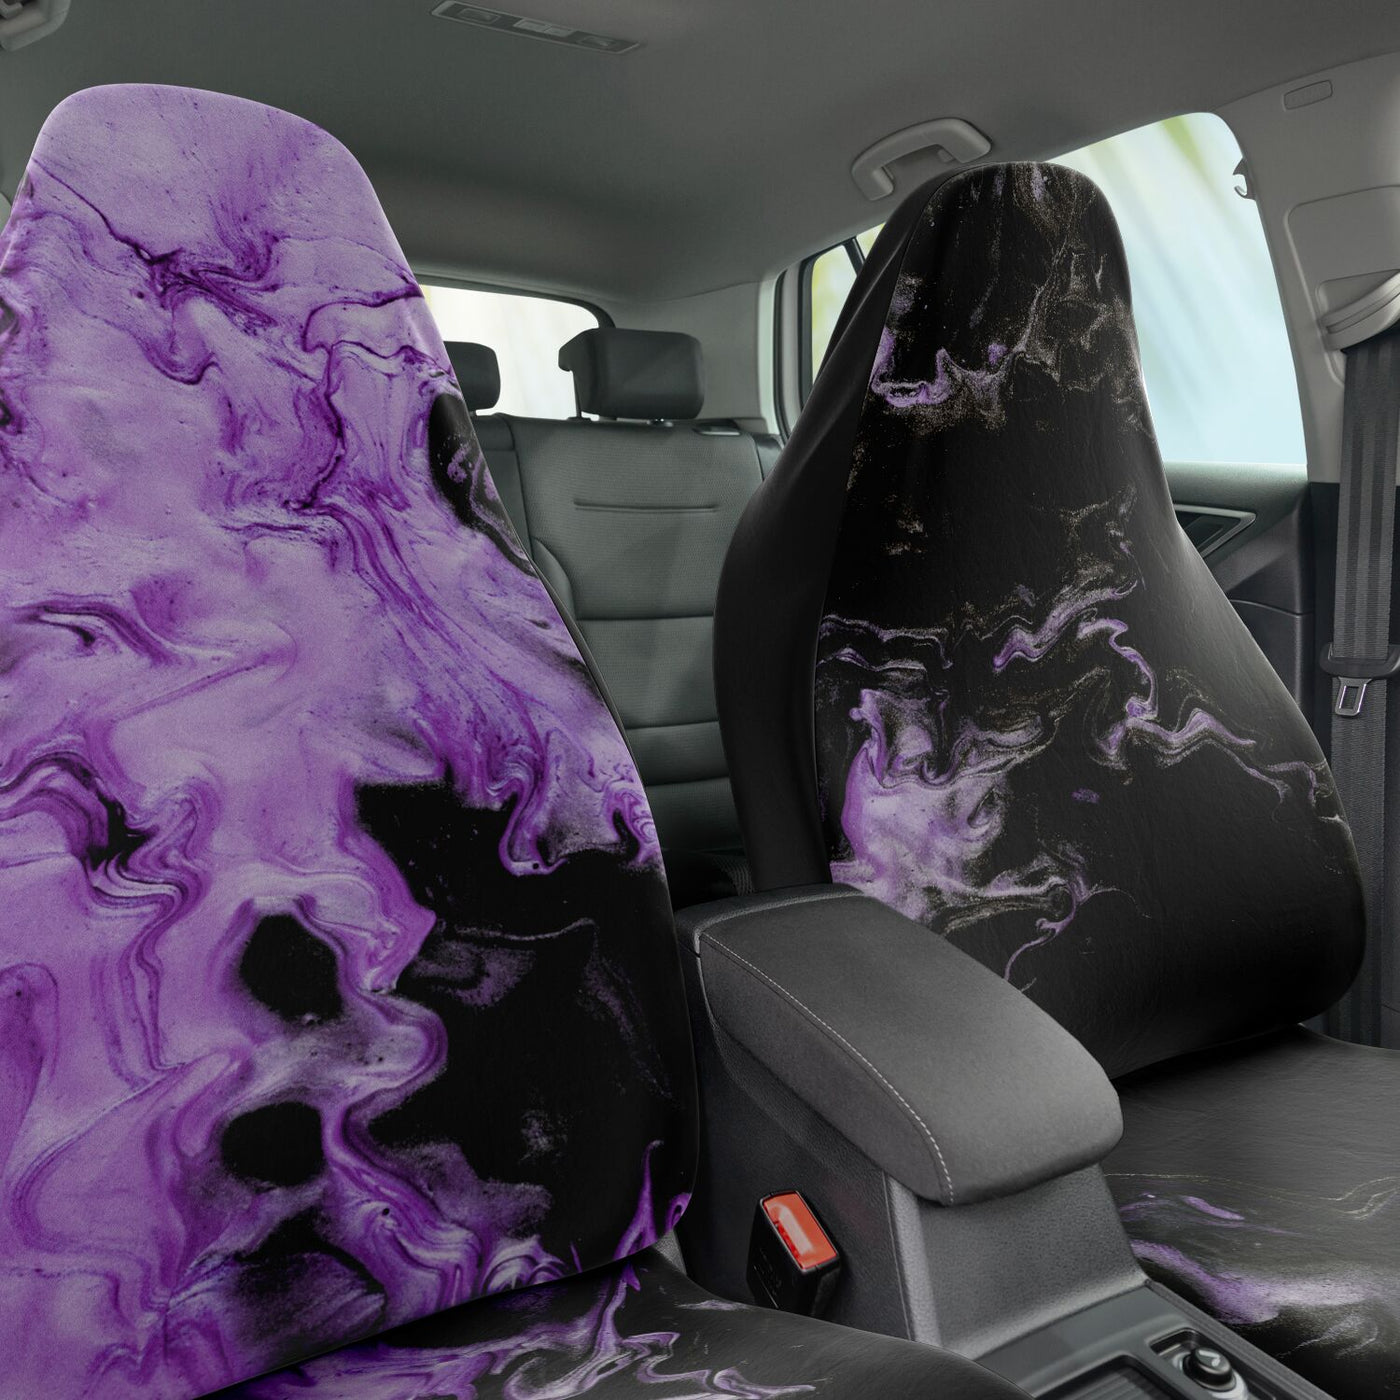 Dark Slate Gray Flowing Metallic Purple | Car Seat Covers